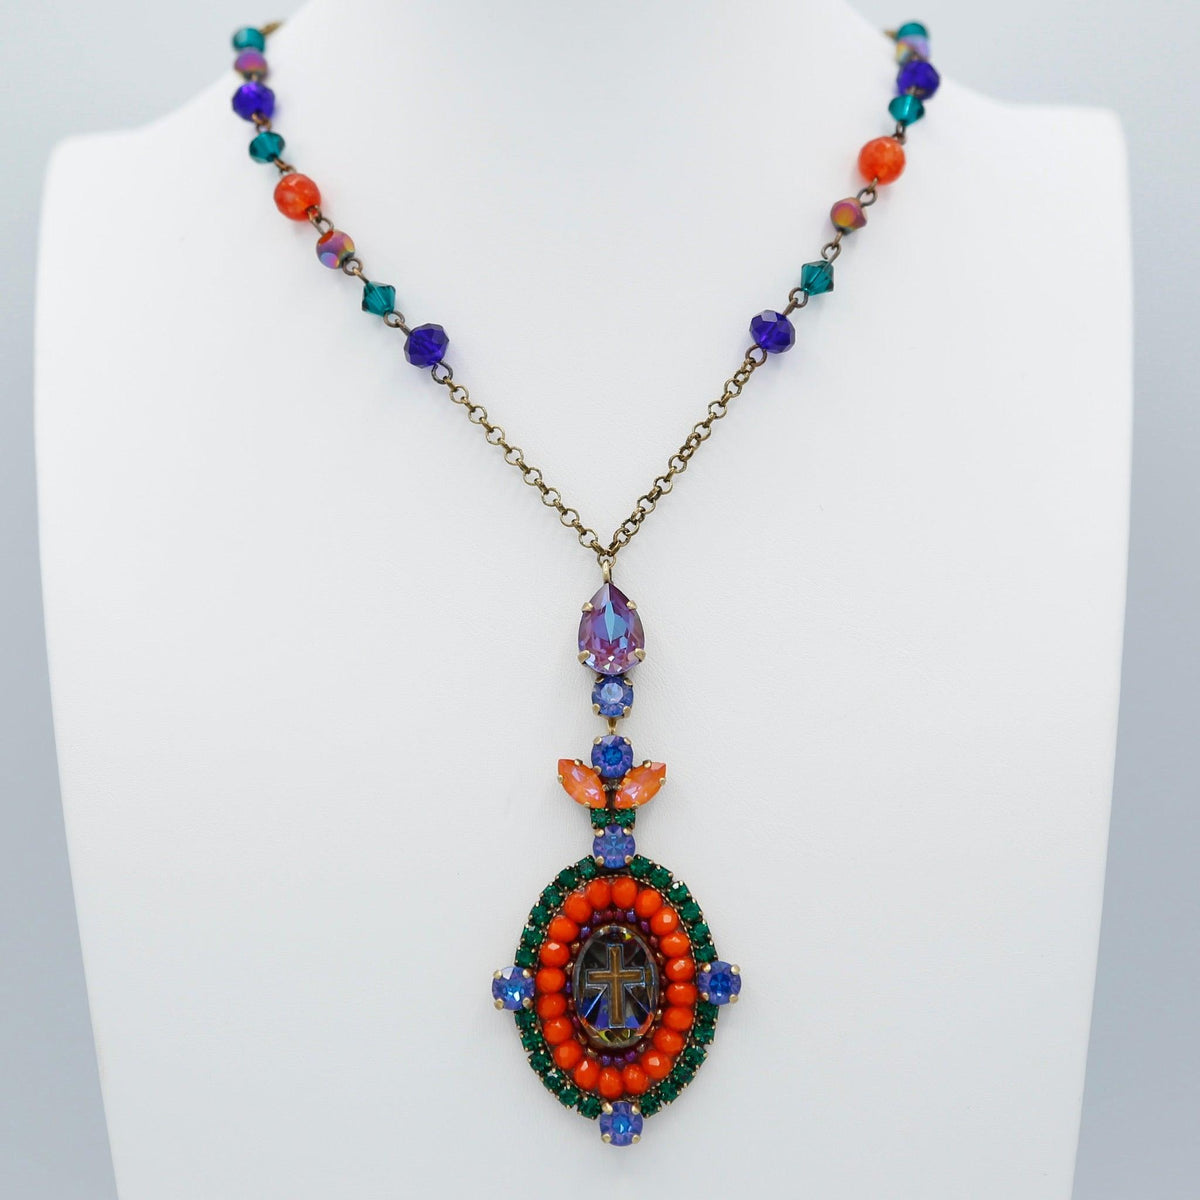 Multicolor Glass Stone Chain Necklace with Beaded Cross Pendant - Vita Isola